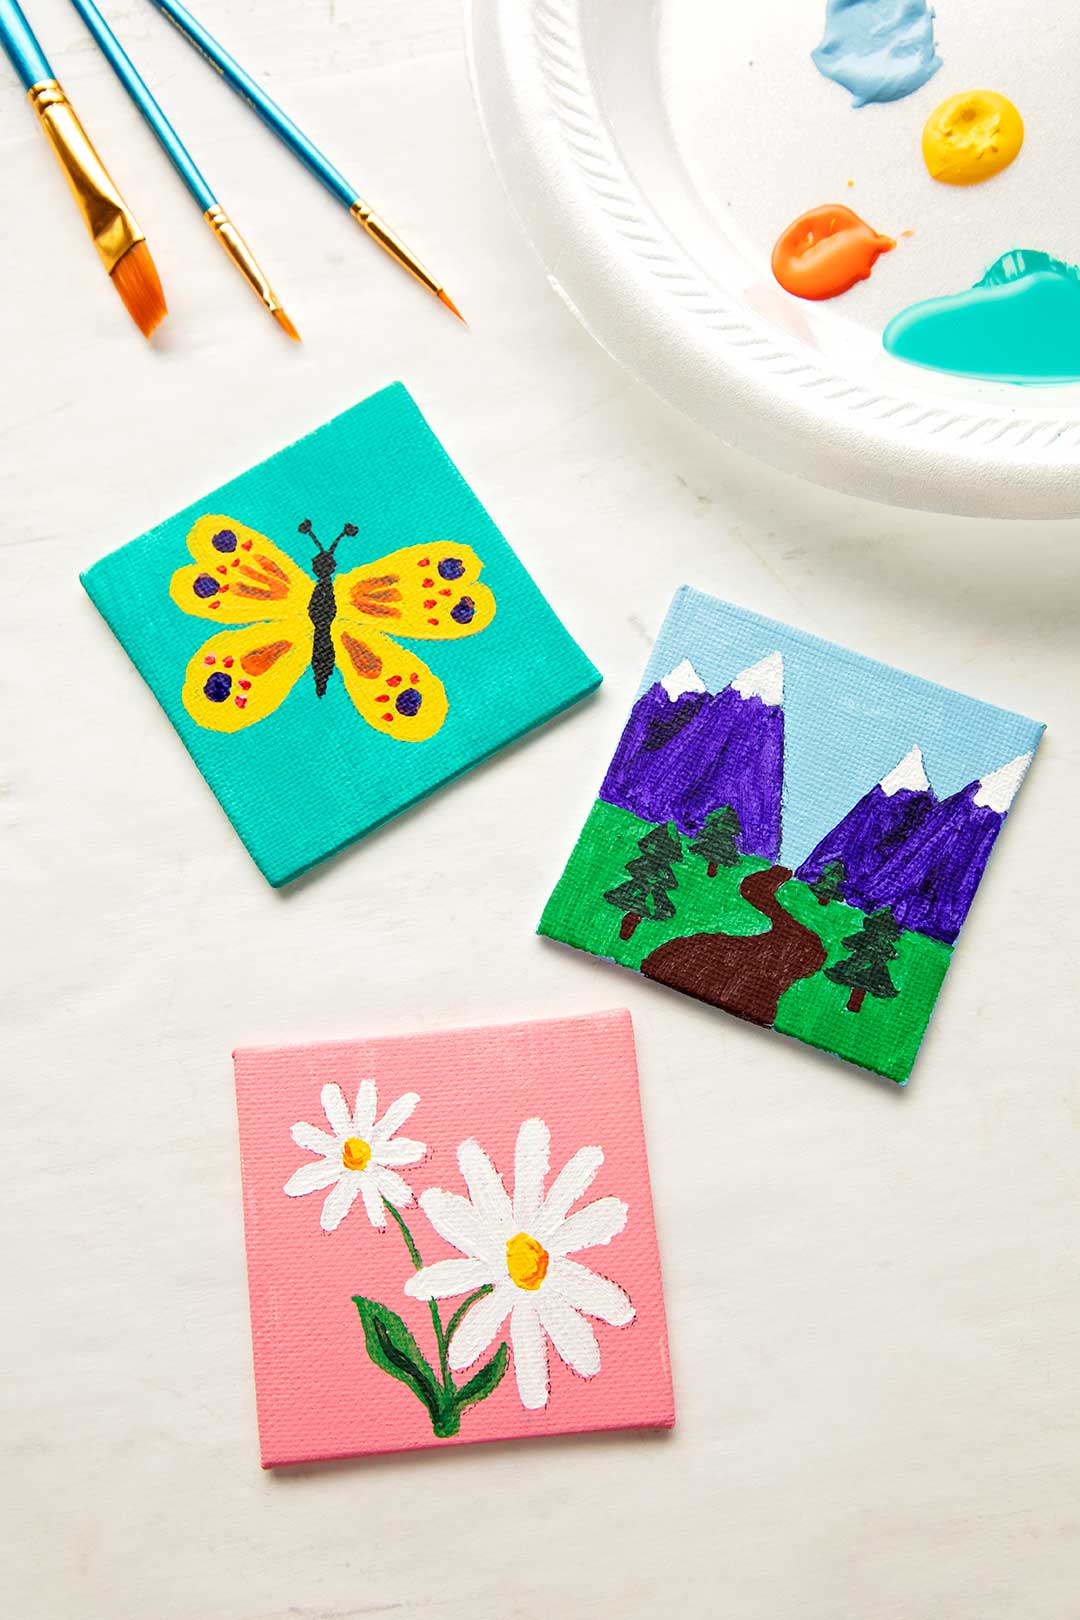 Mini Canvas Print Ideas: How to Hang Mini Canvas Photo Art